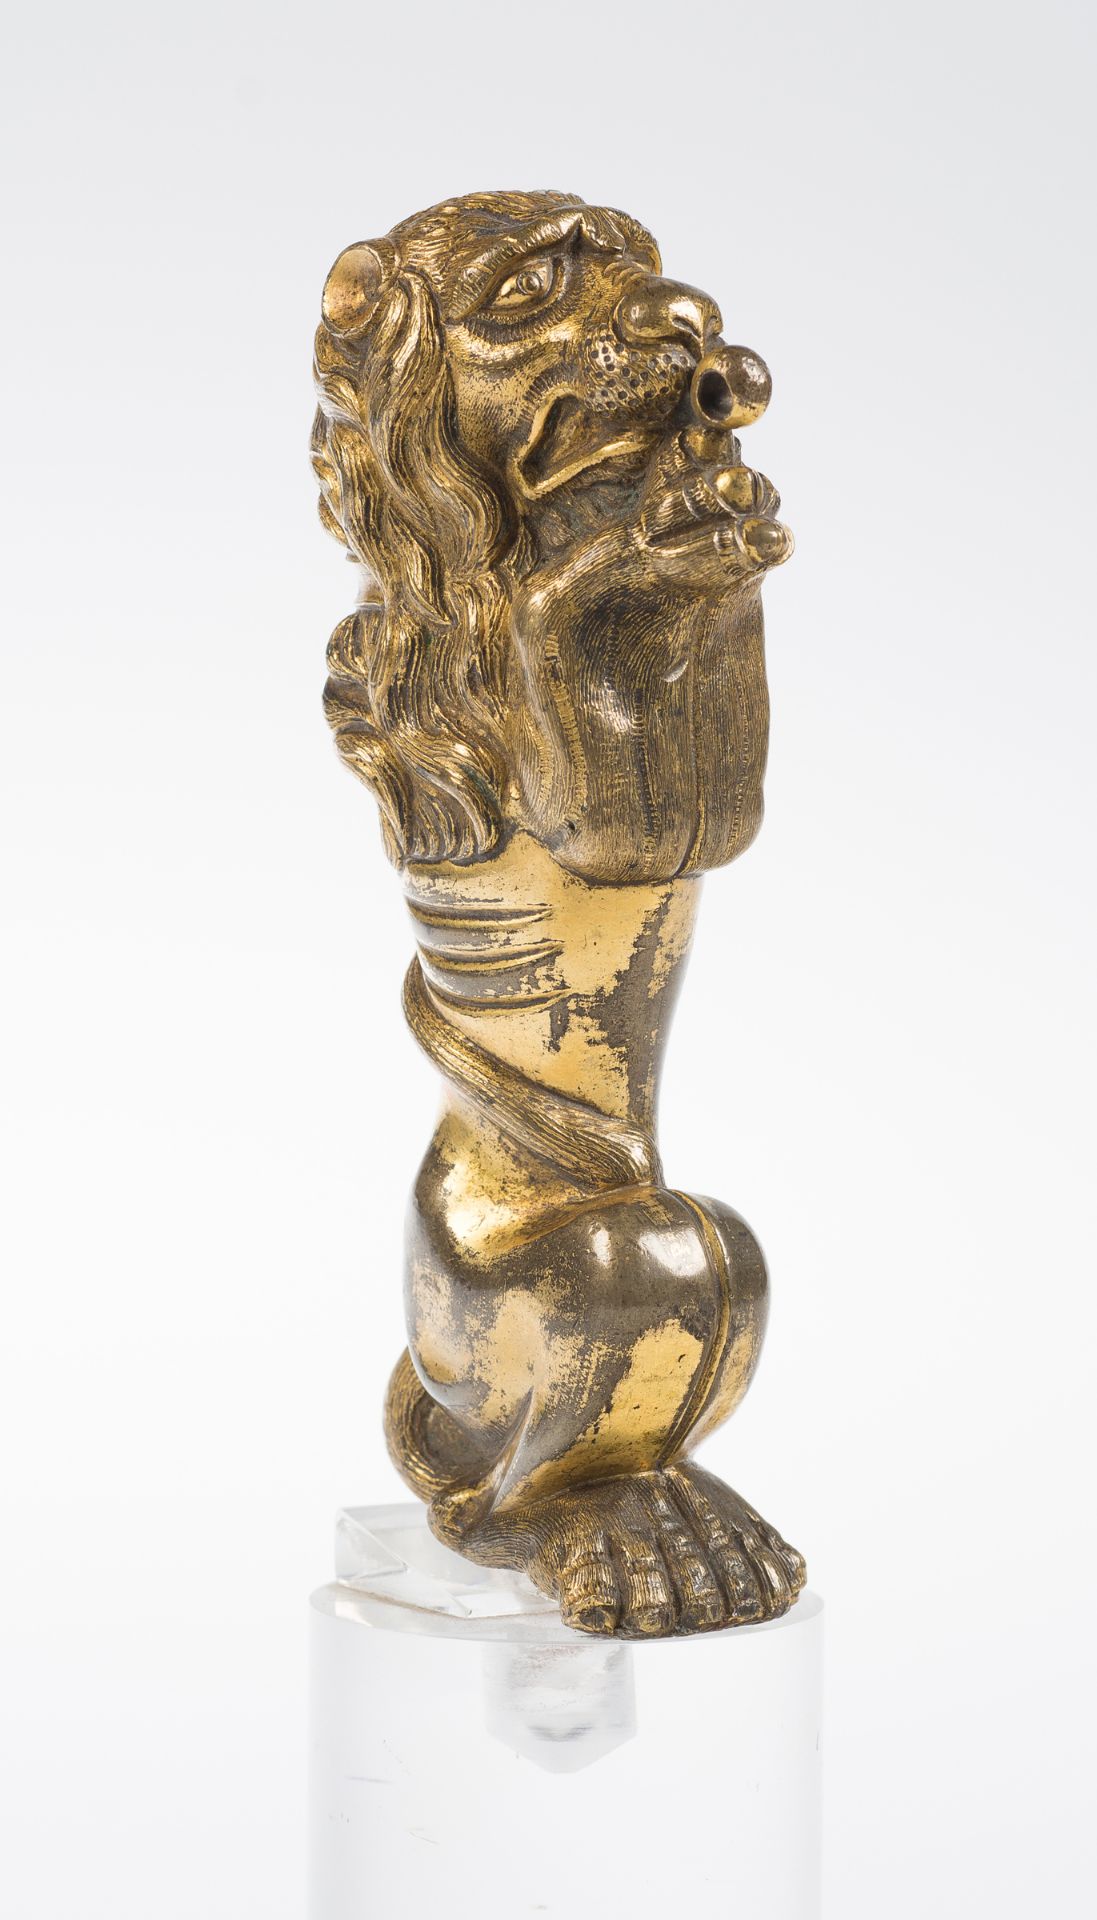 Gilded and chased bronze lion. Italian-Flemish work. Renaissance. Circa 1500. - Bild 2 aus 7